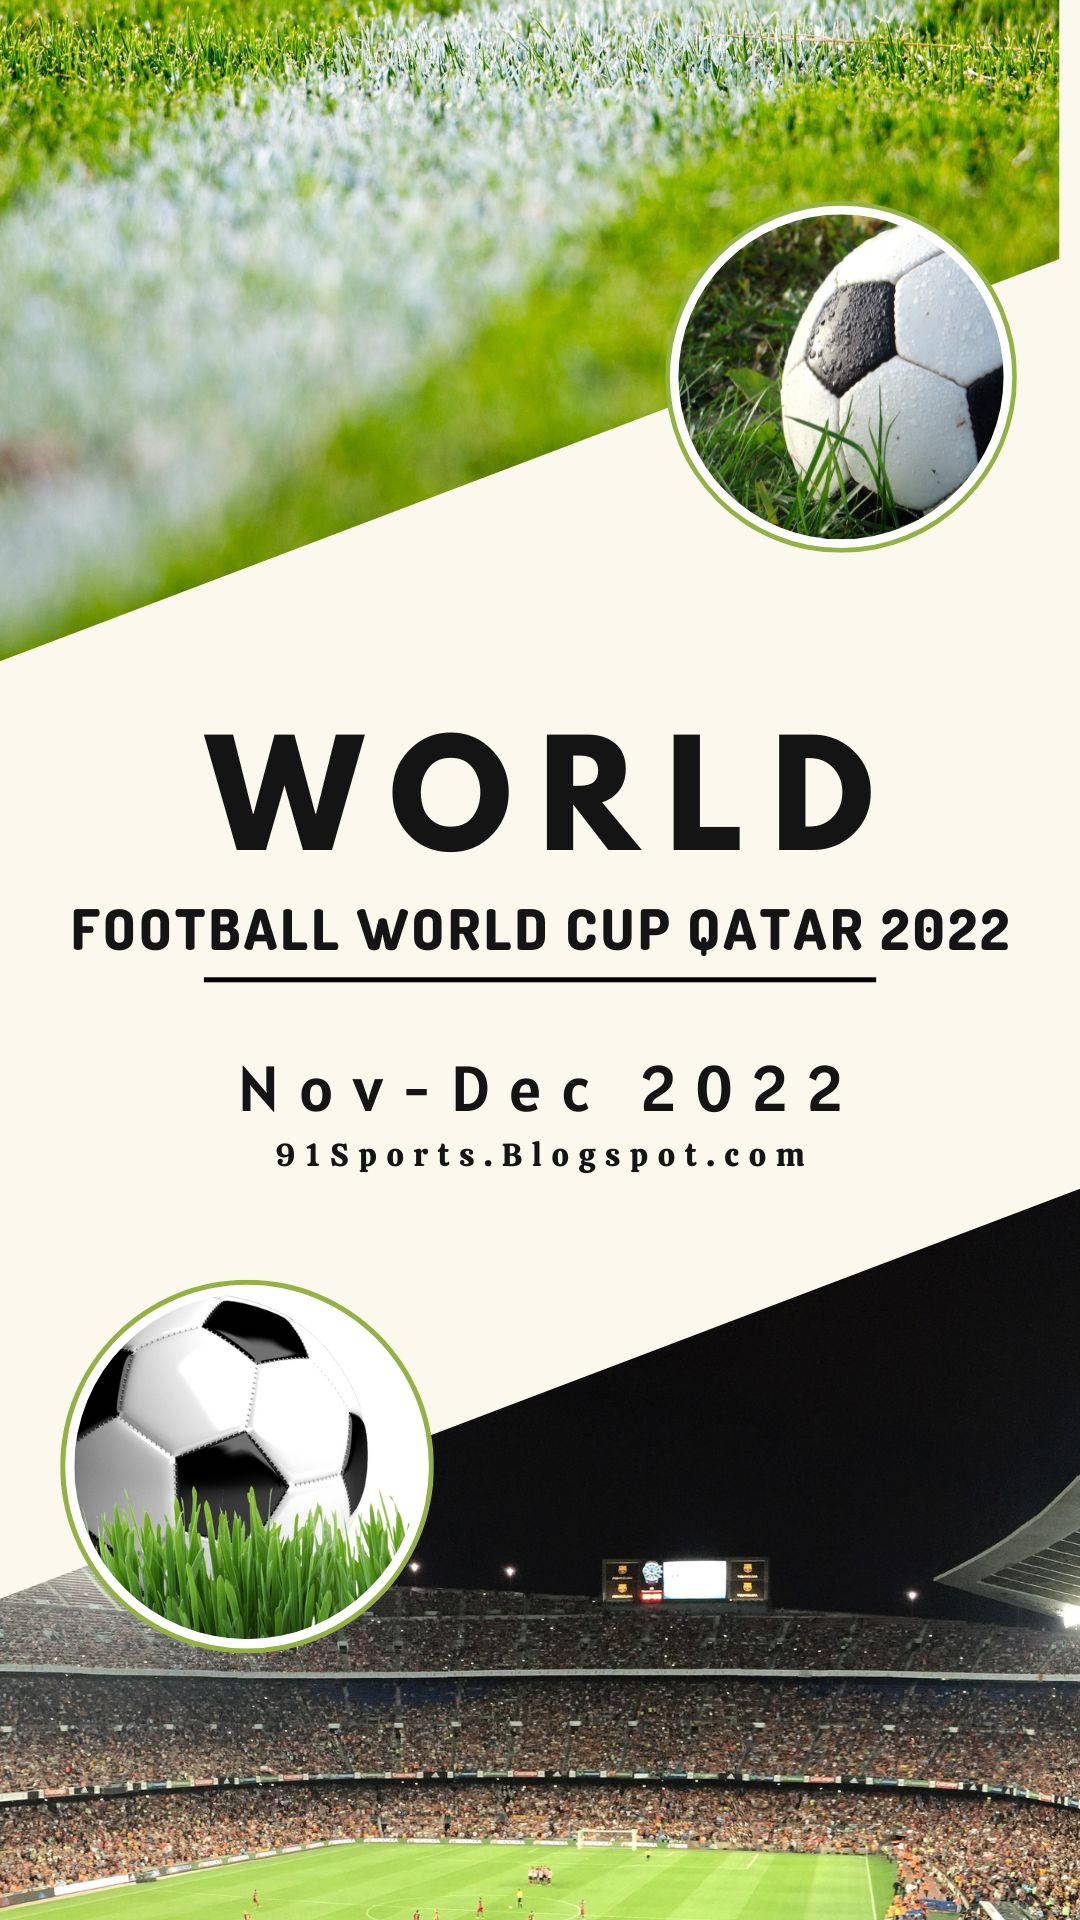 Football World Cup Qatar 2022